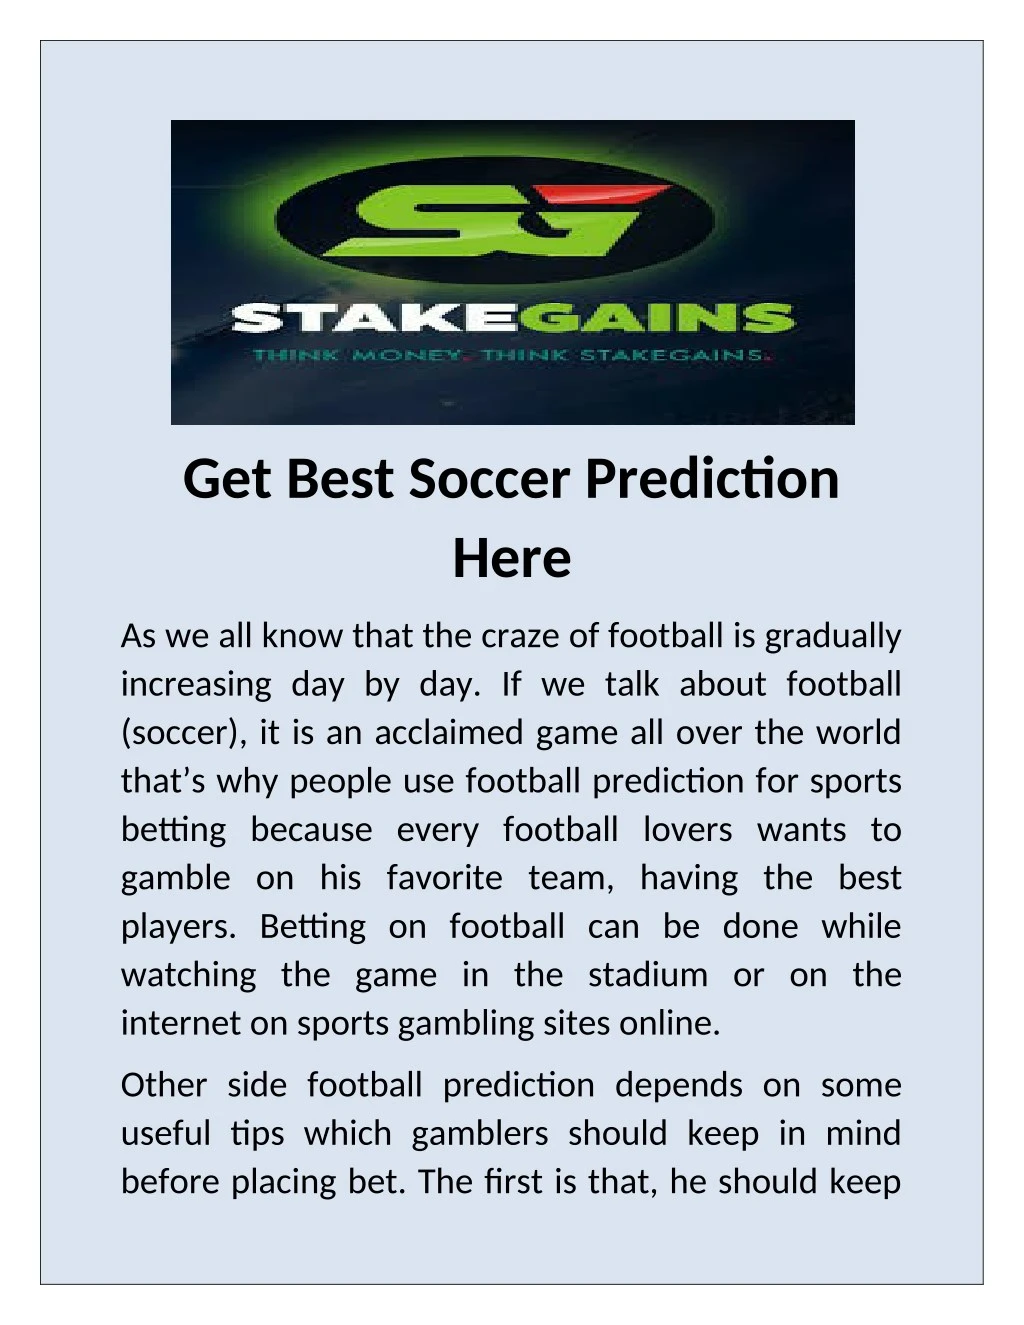 get best soccer prediction here